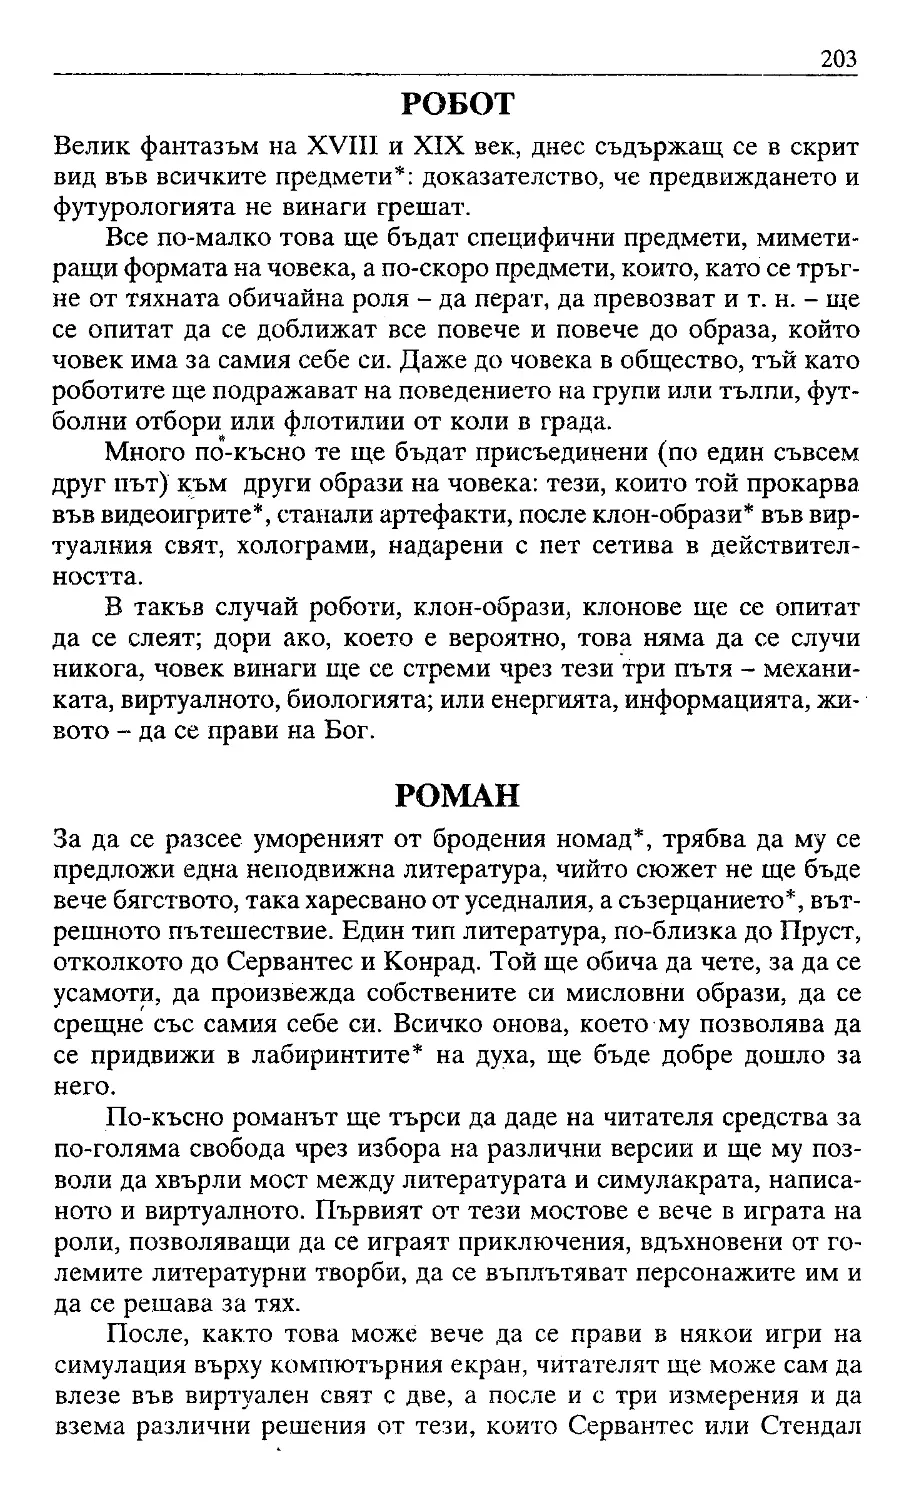 ﻿Жак Атали. Речник на 21 век_Page_100_Image_0001_2